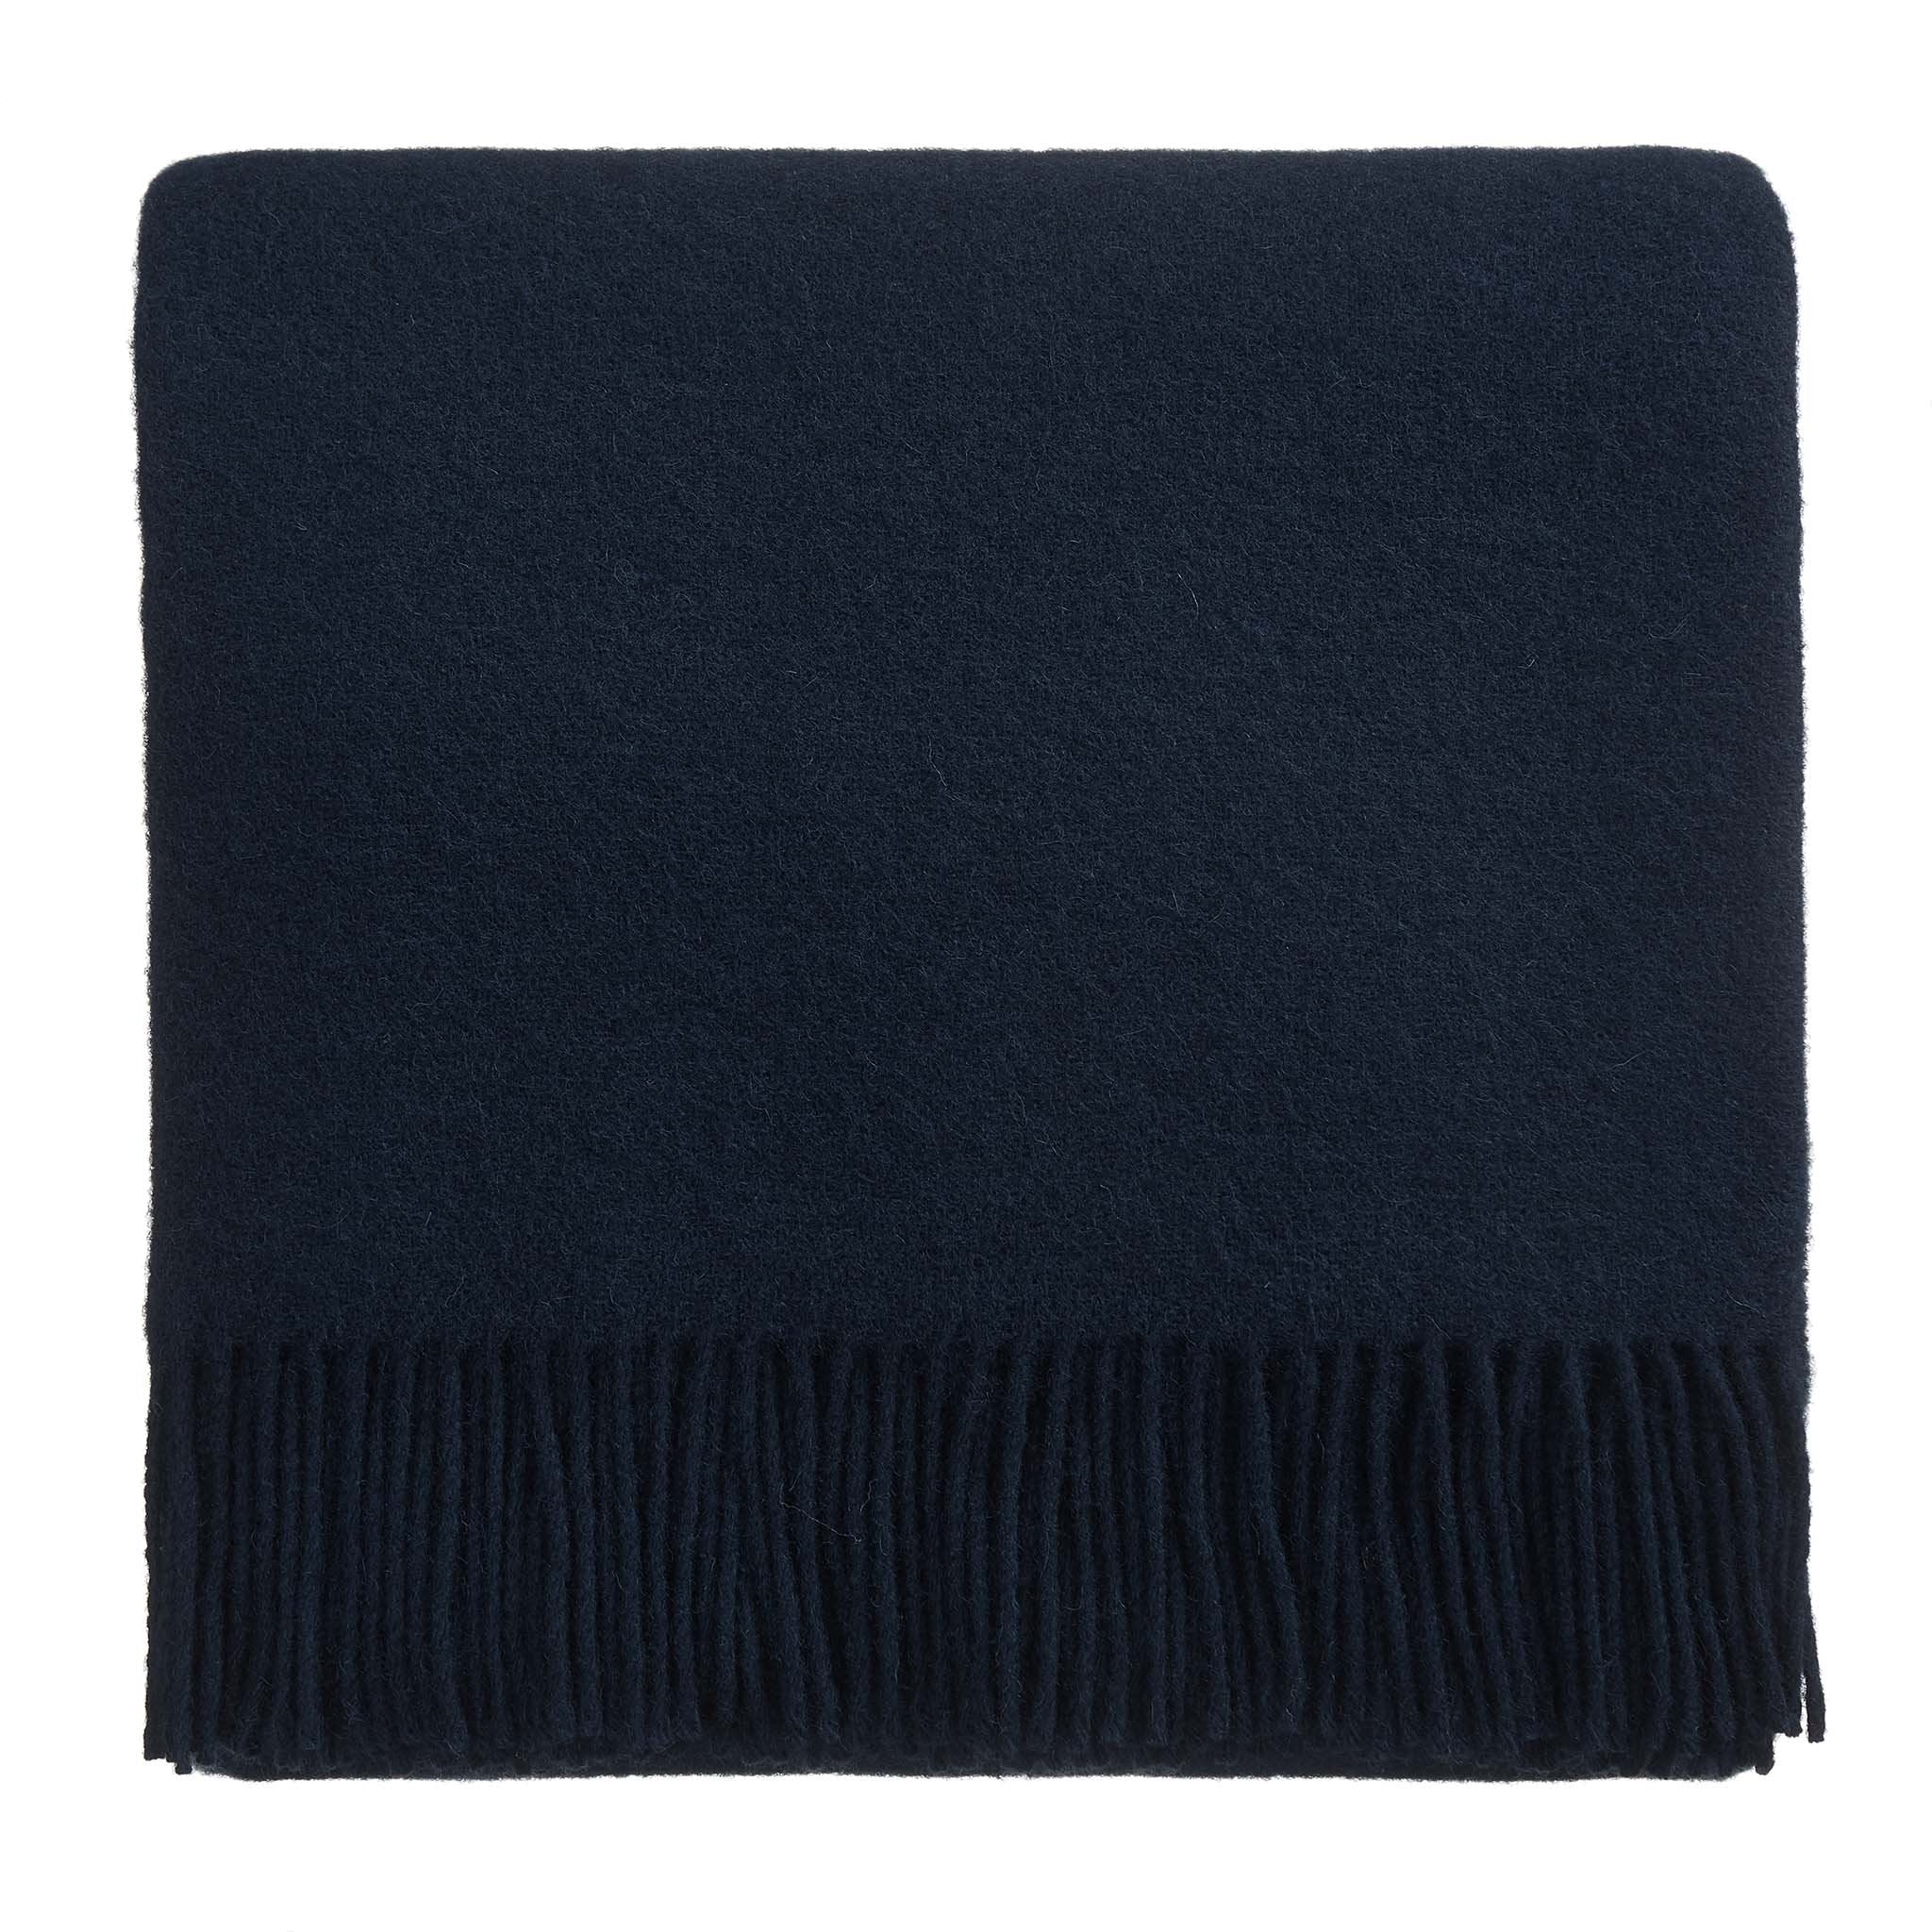 Miramar Wool Blanket, dark blue | URBANARA